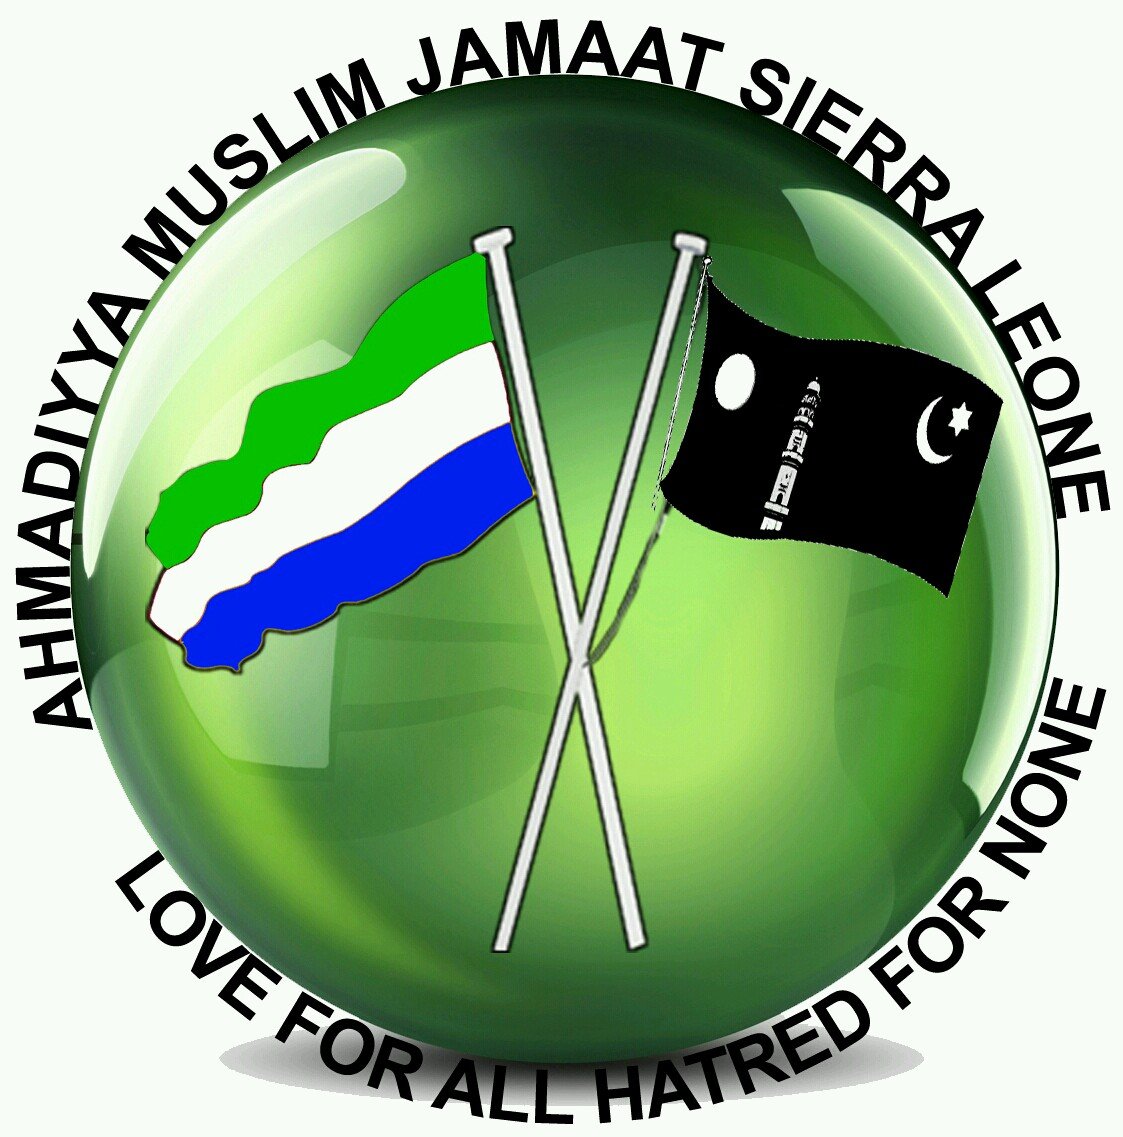 Official Twitter Account of Ahmadiyya Muslim Jama'at Sierra Leone, re-tweets are not endorsements!